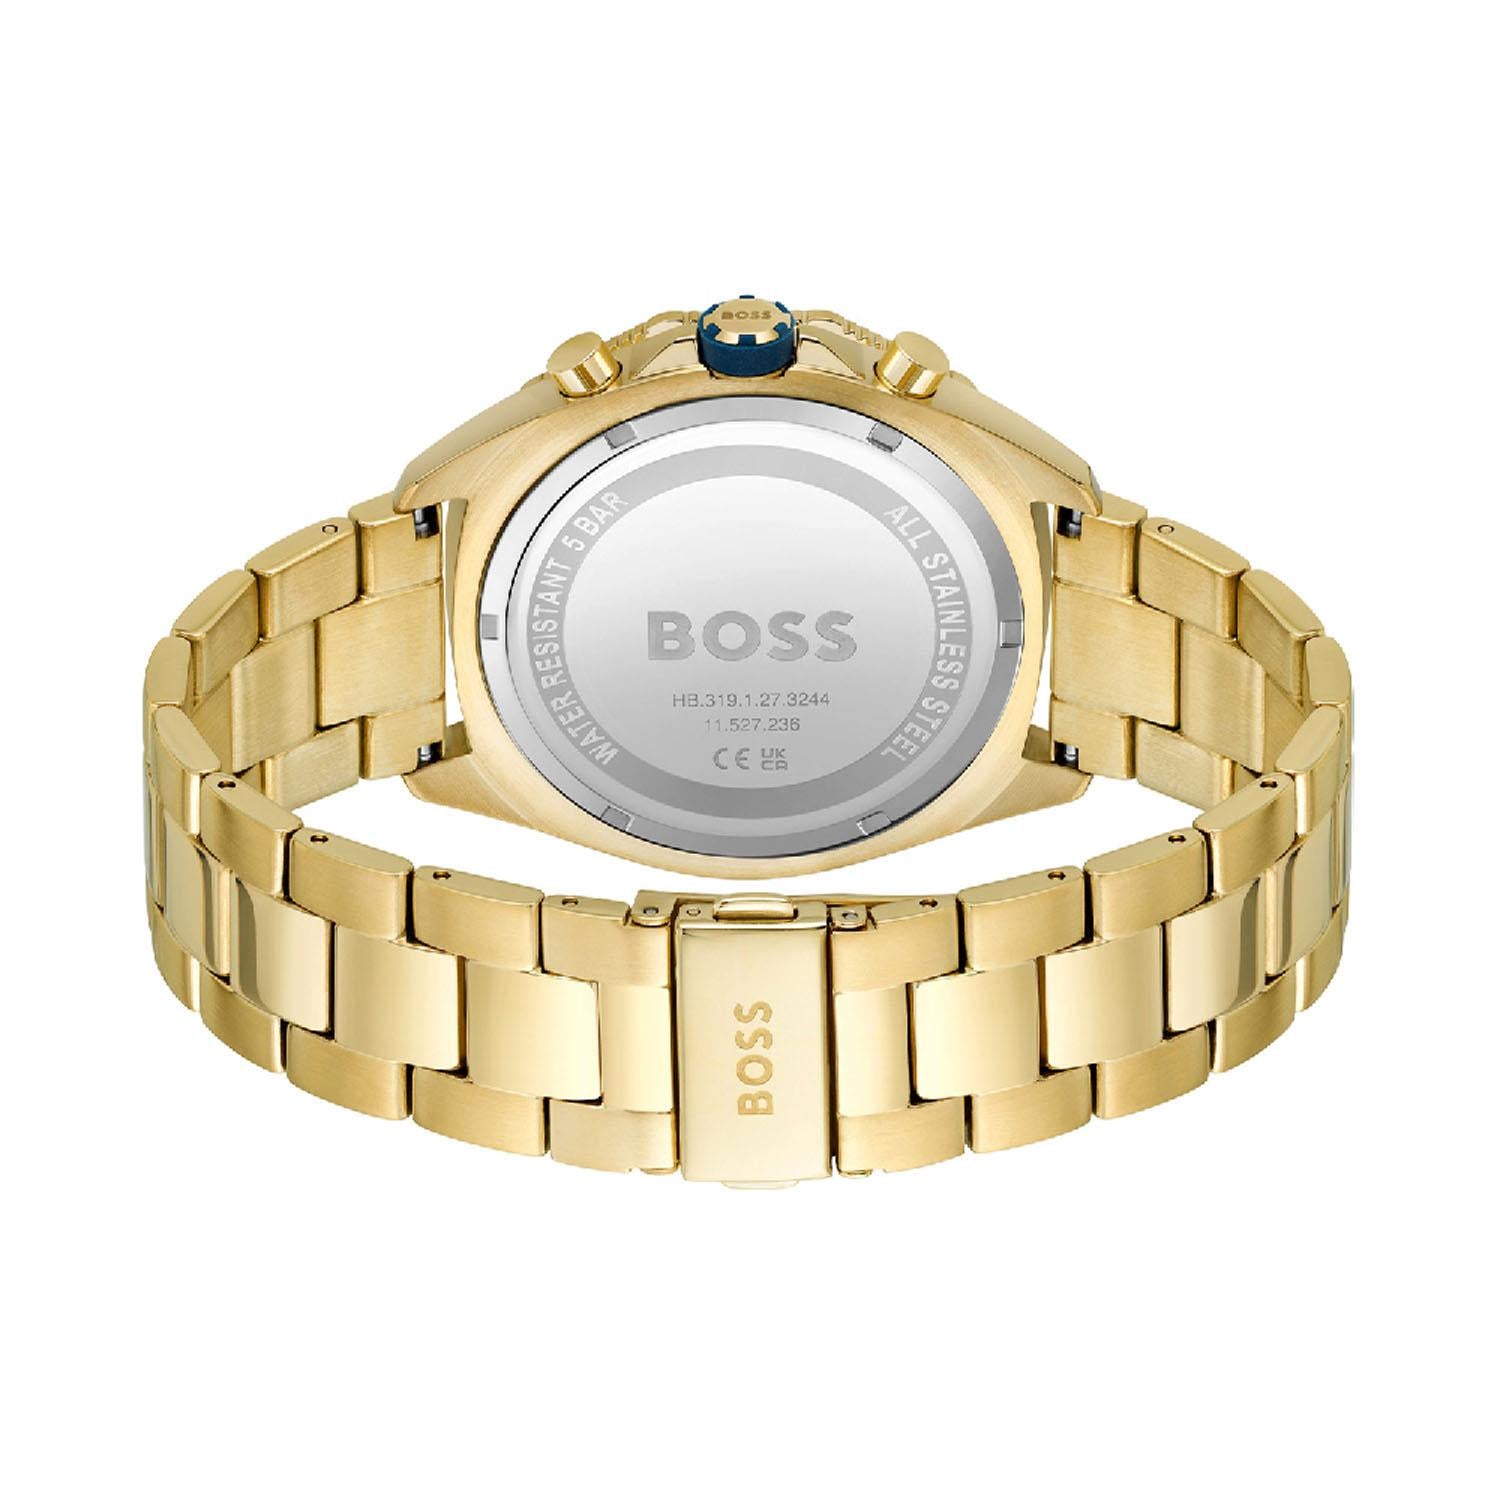 Hugo Boss 1513973 Energy Chronograph Men's Watch